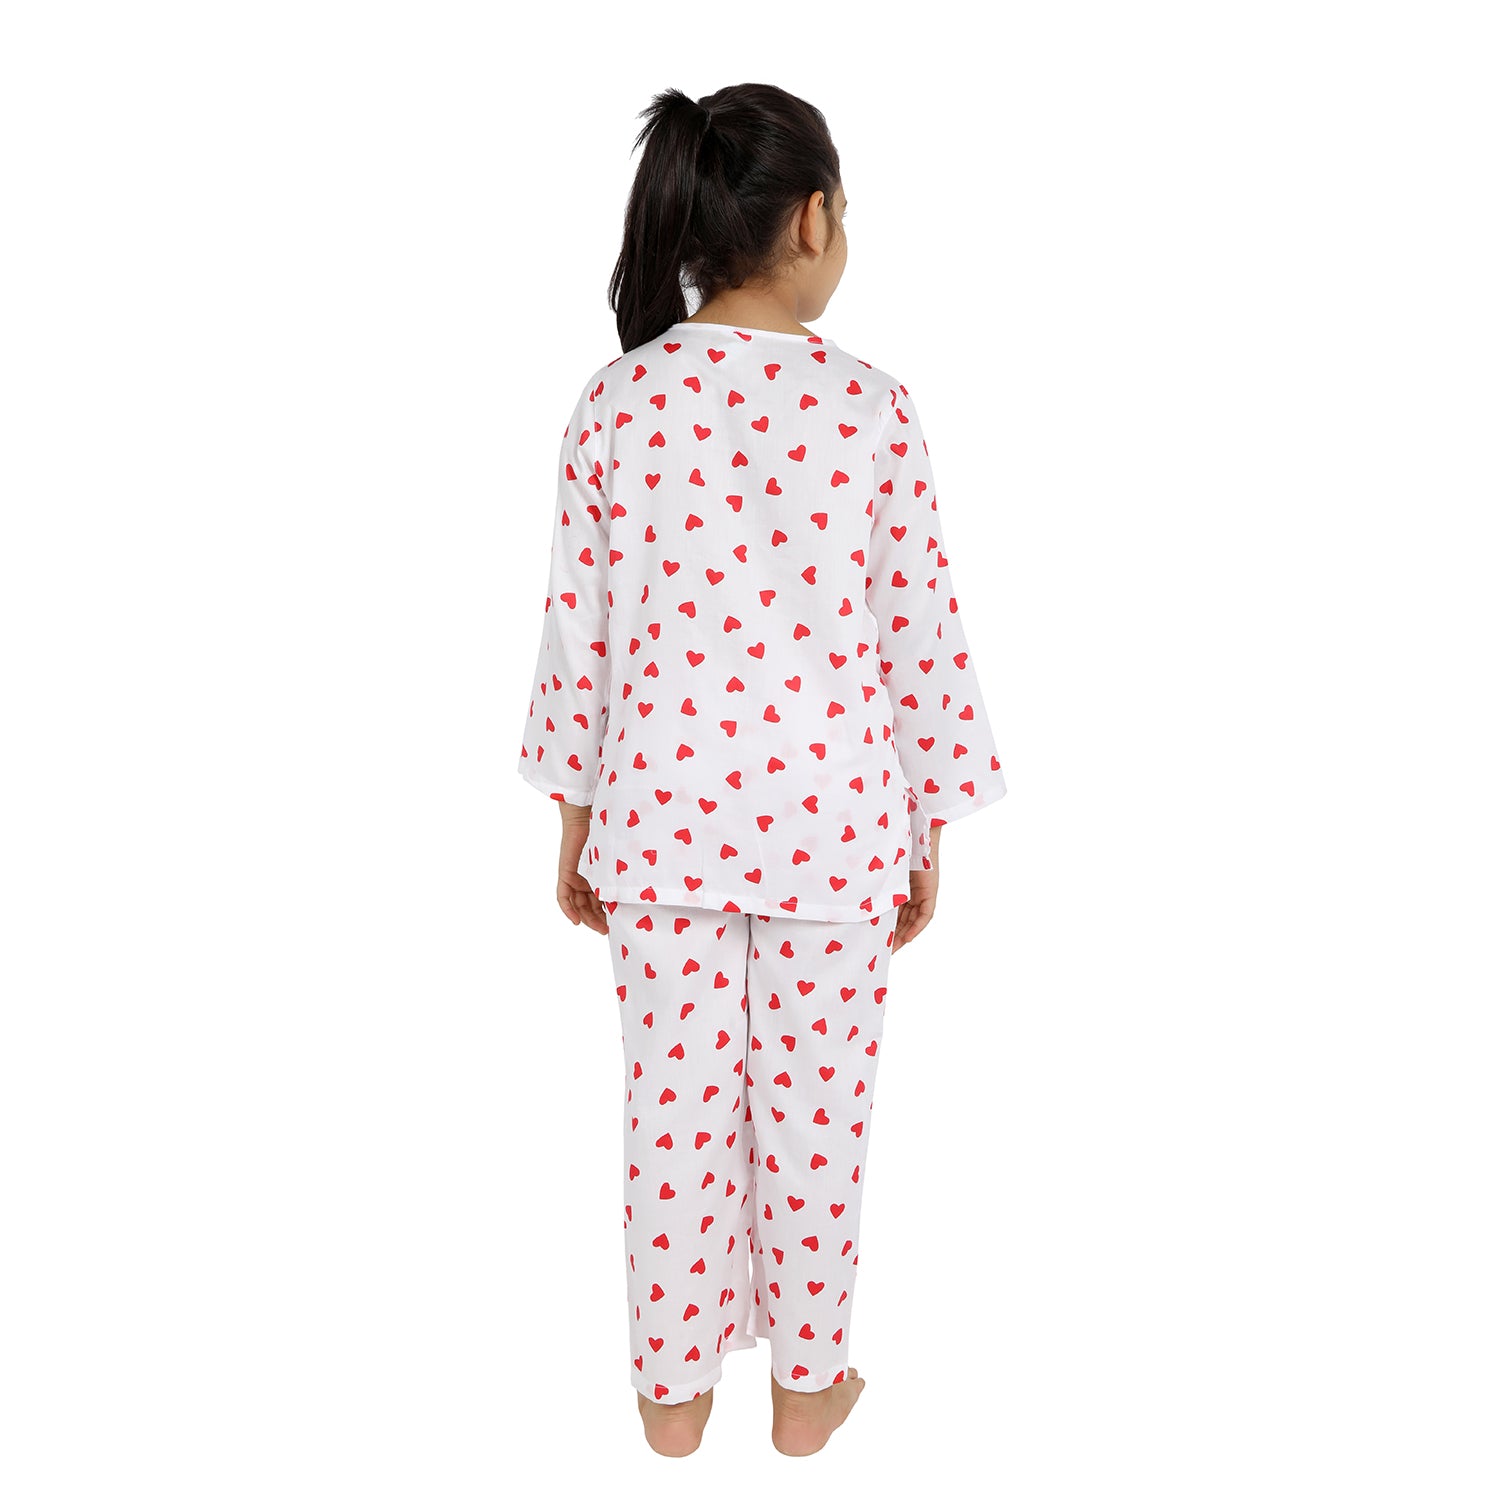 Kid's Pyjama Set -  Red Hearts